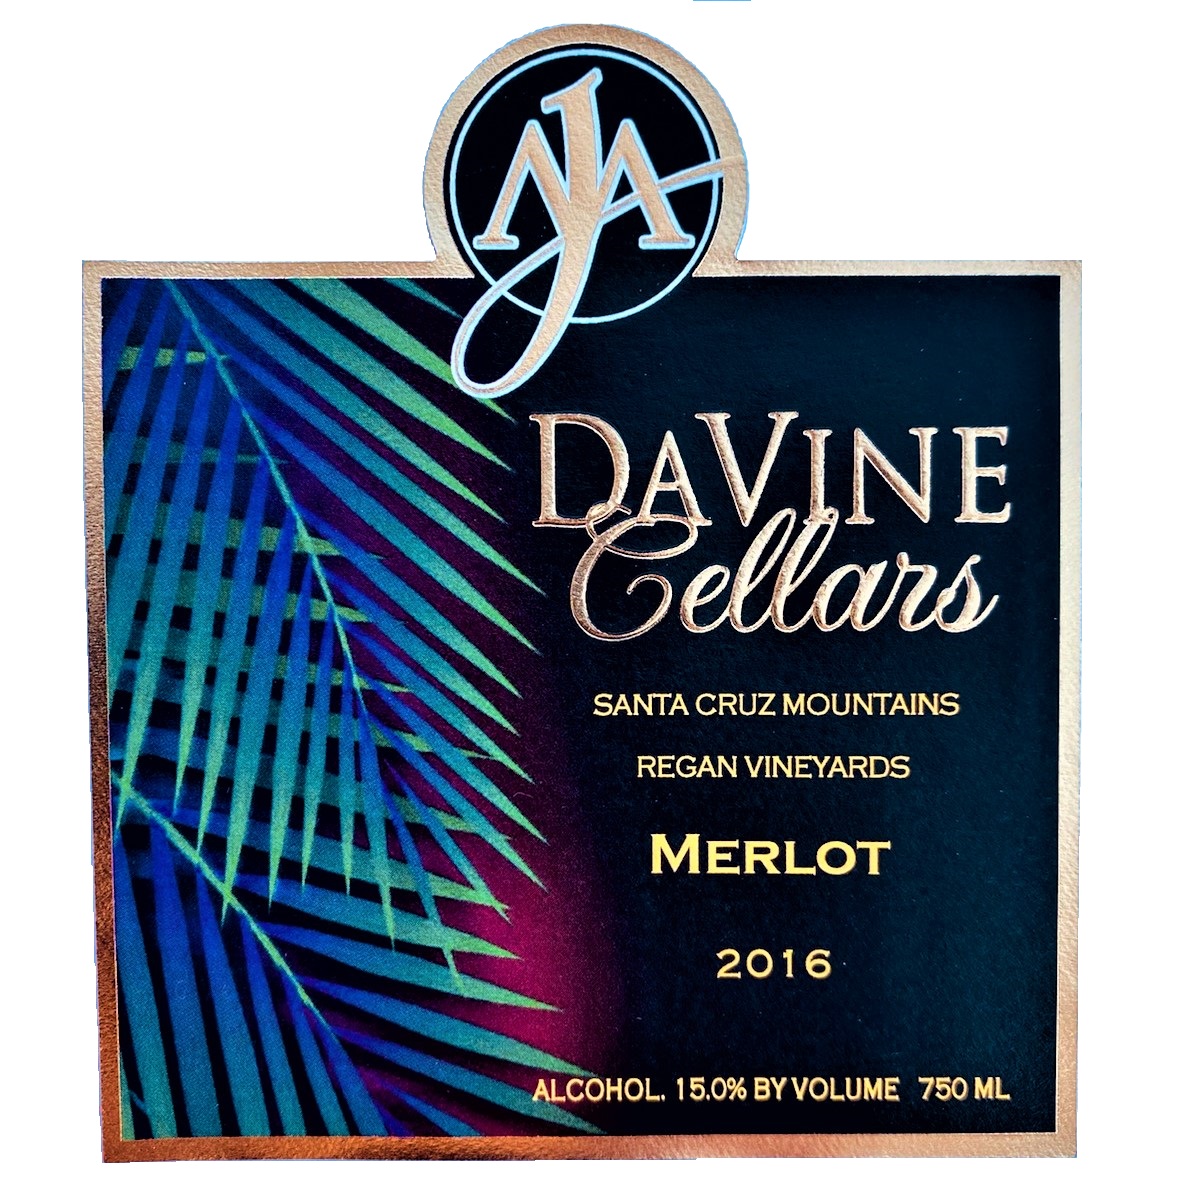 Product Image for 2016 Santa Cruz Mountains Merlot "F'n Merlot"